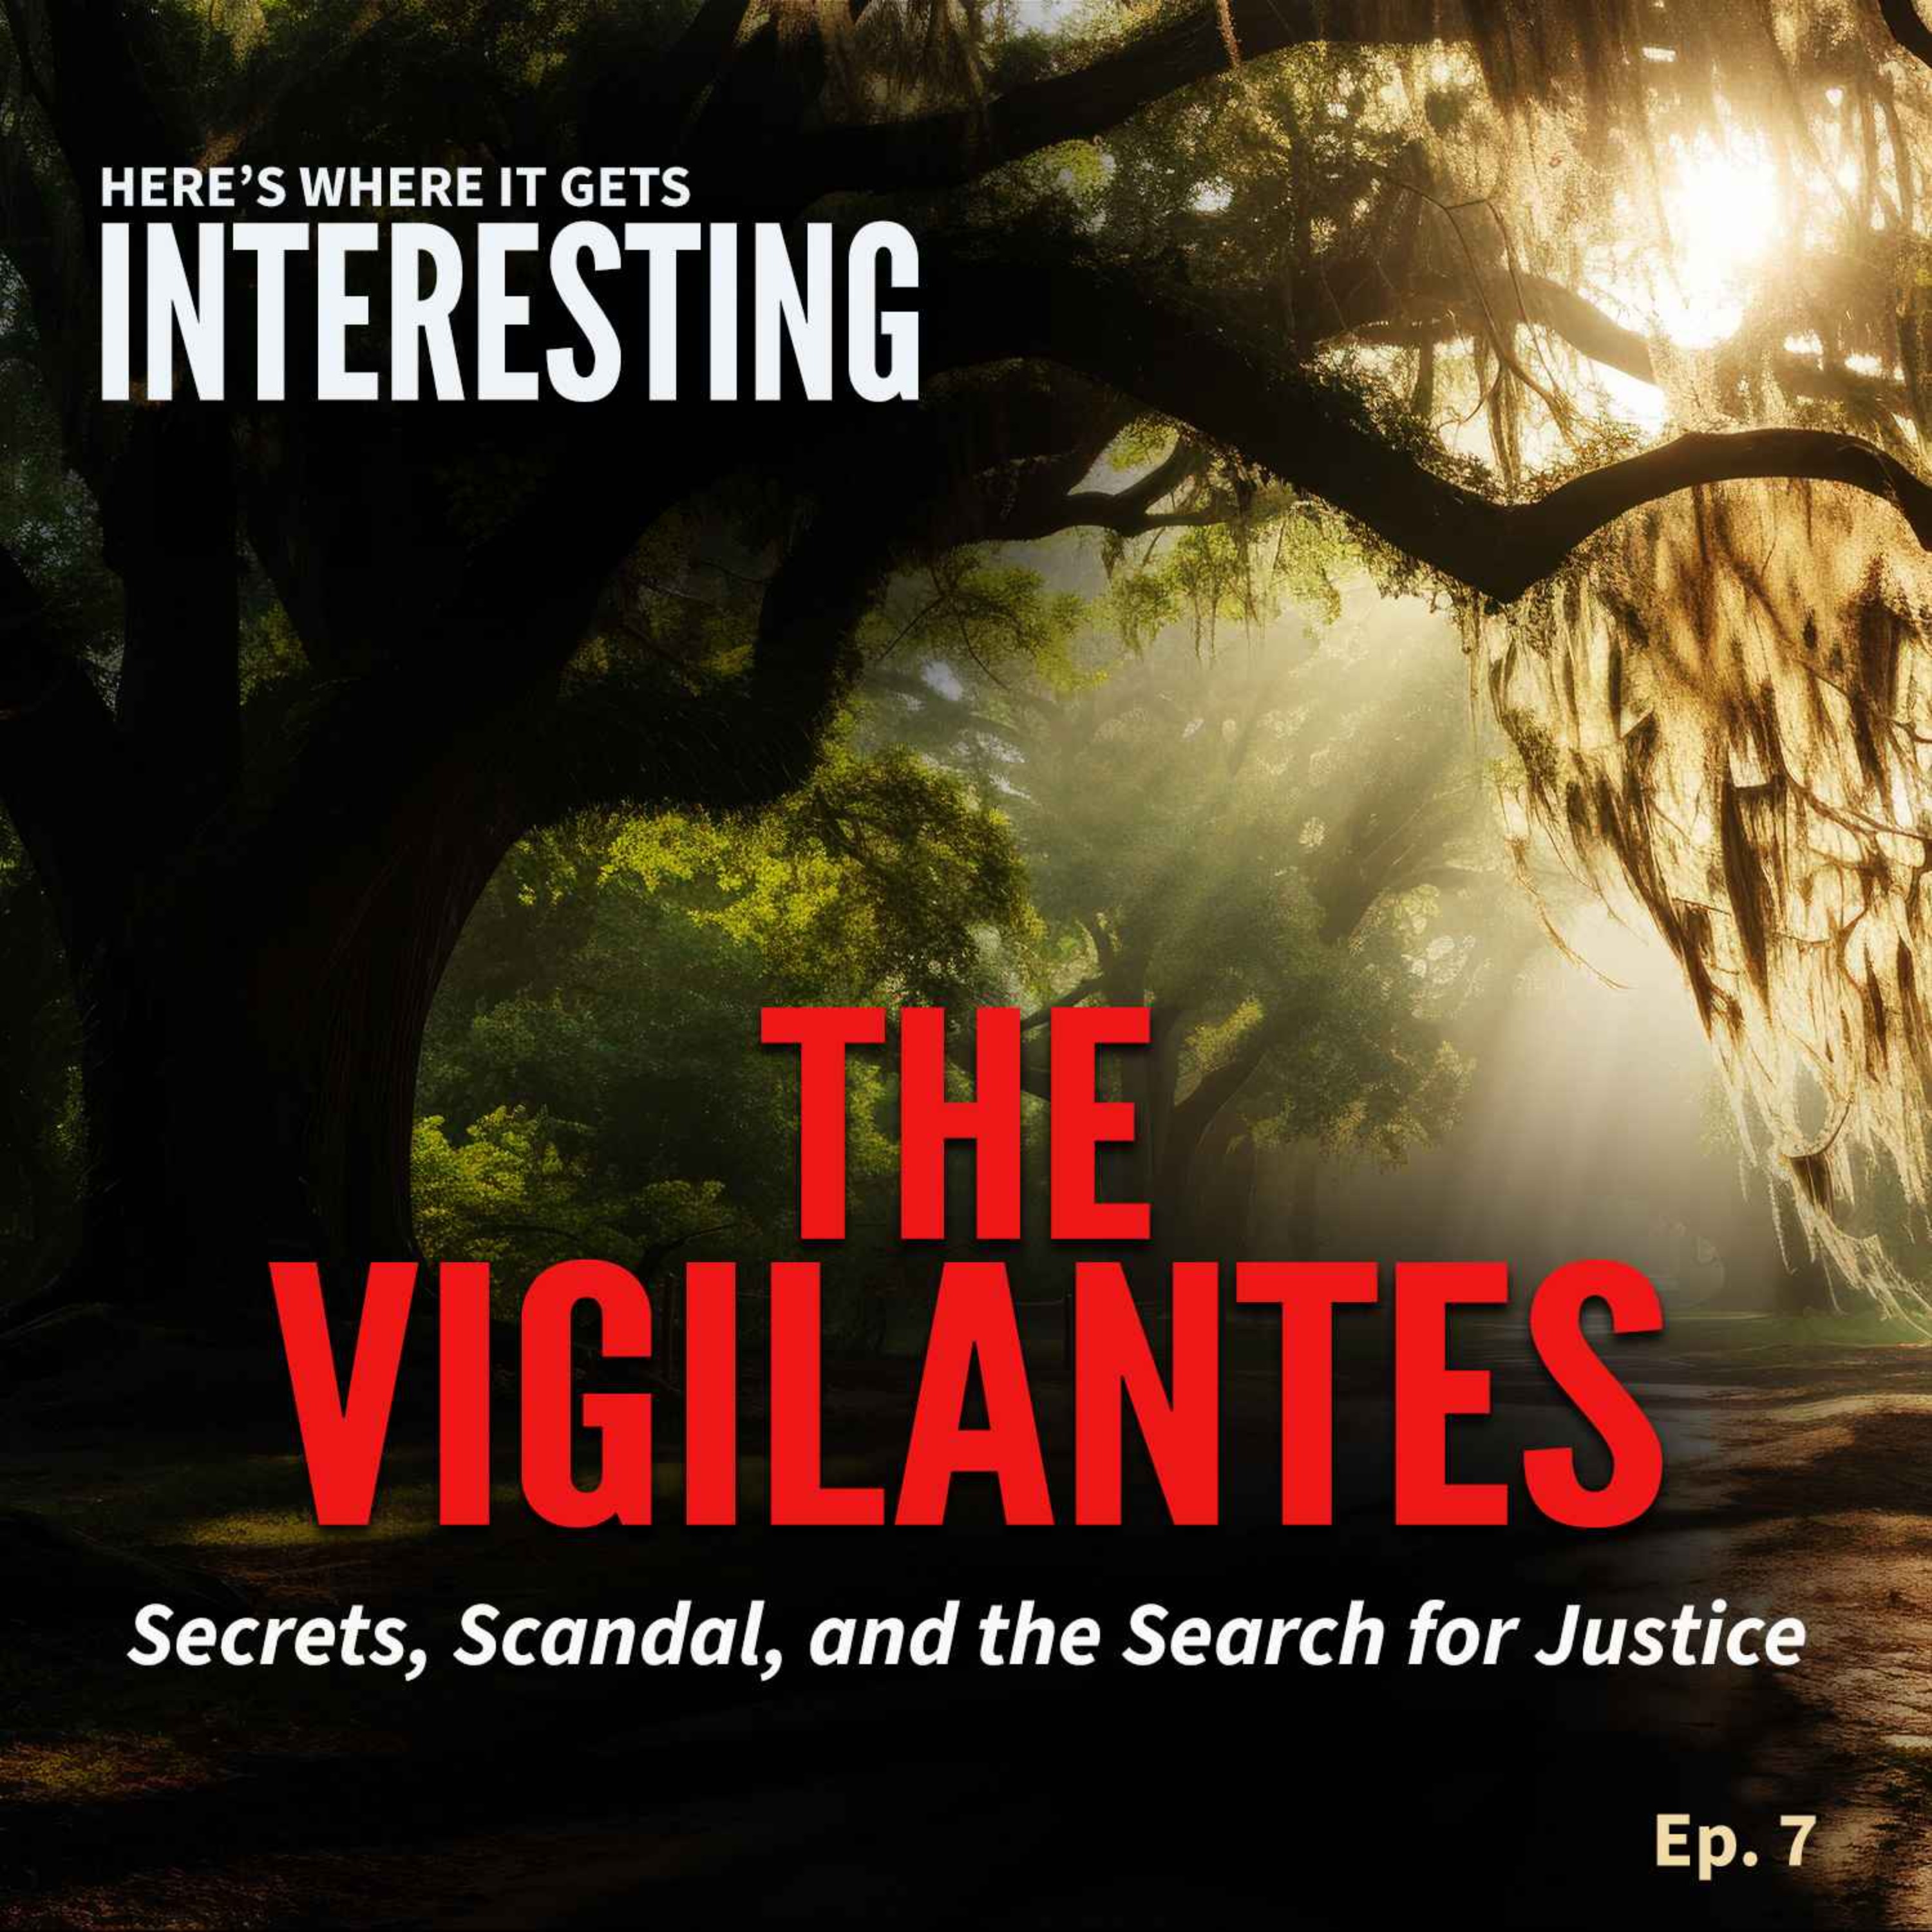 The Vigilantes, Episode 7